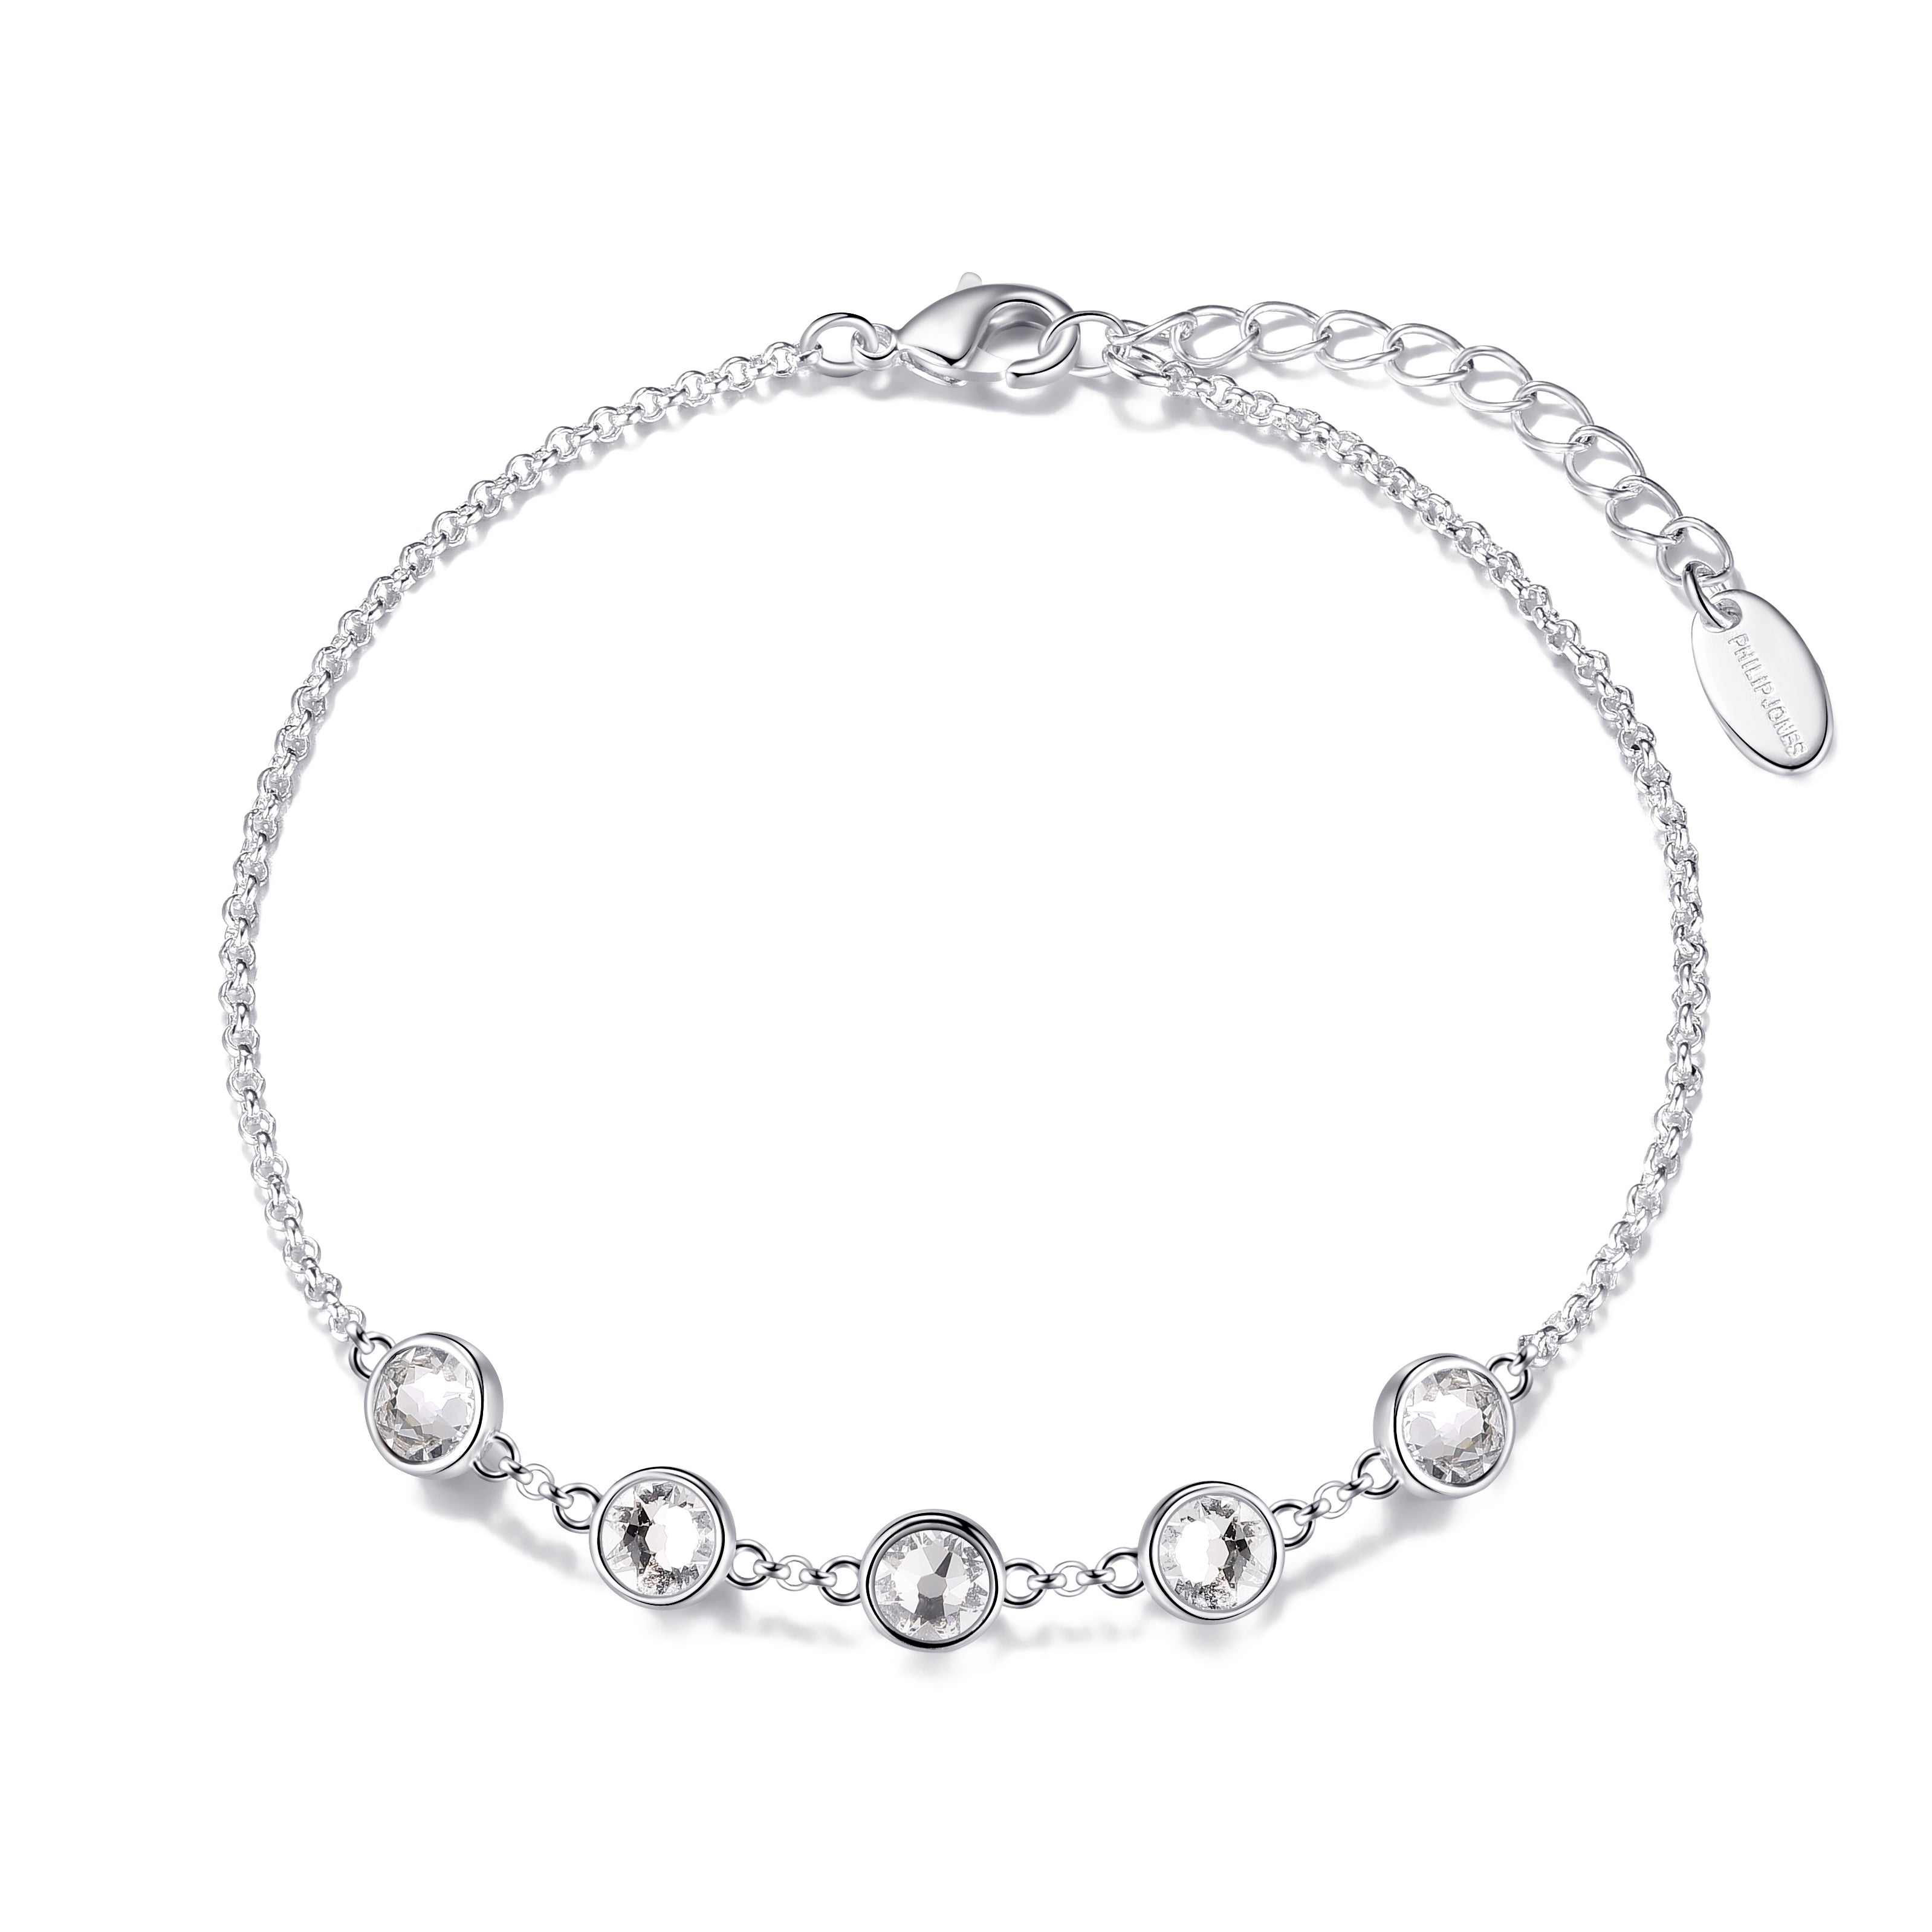 Crystal Chain Bracelet Created with Zircondia® Crystals by Philip Jones Jewellery